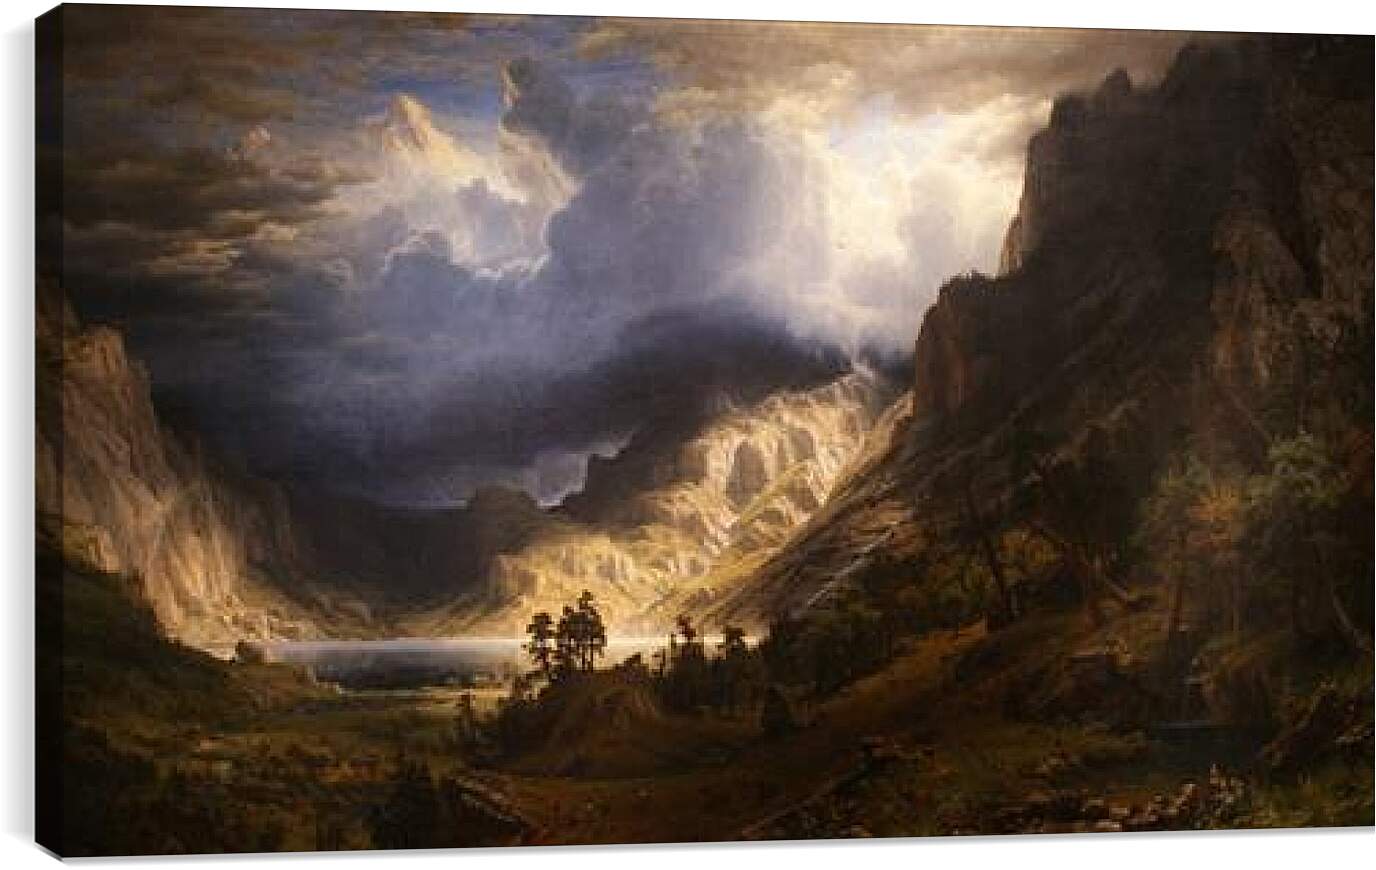 Постер и плакат - A Storm in the Rocky Mountains Mr. Rosalie. Шторм в Скалистых горах, гора Розали. Альберт Бирштадт